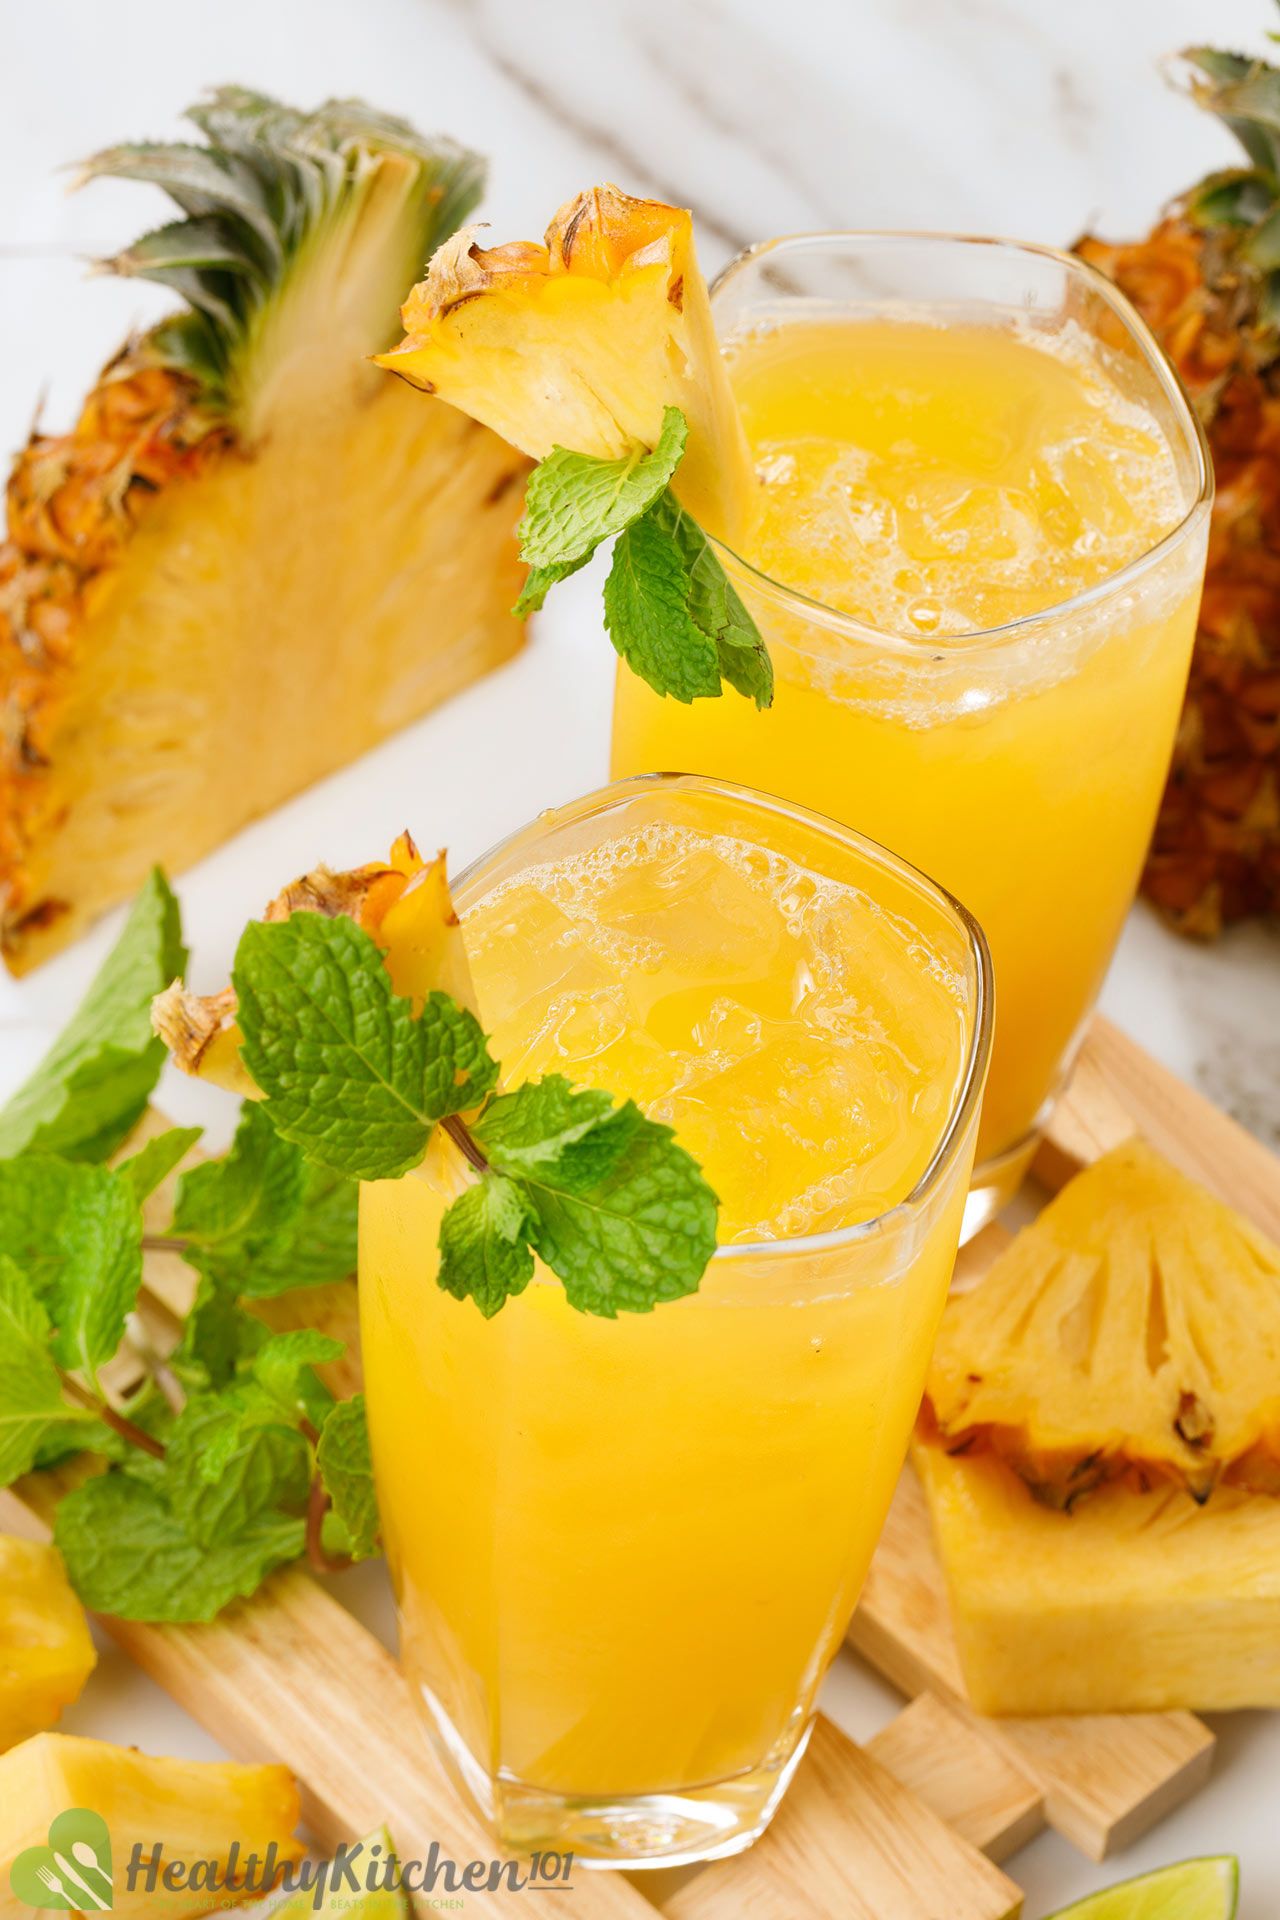 benefits of apple cider vinegar and pineapple juice